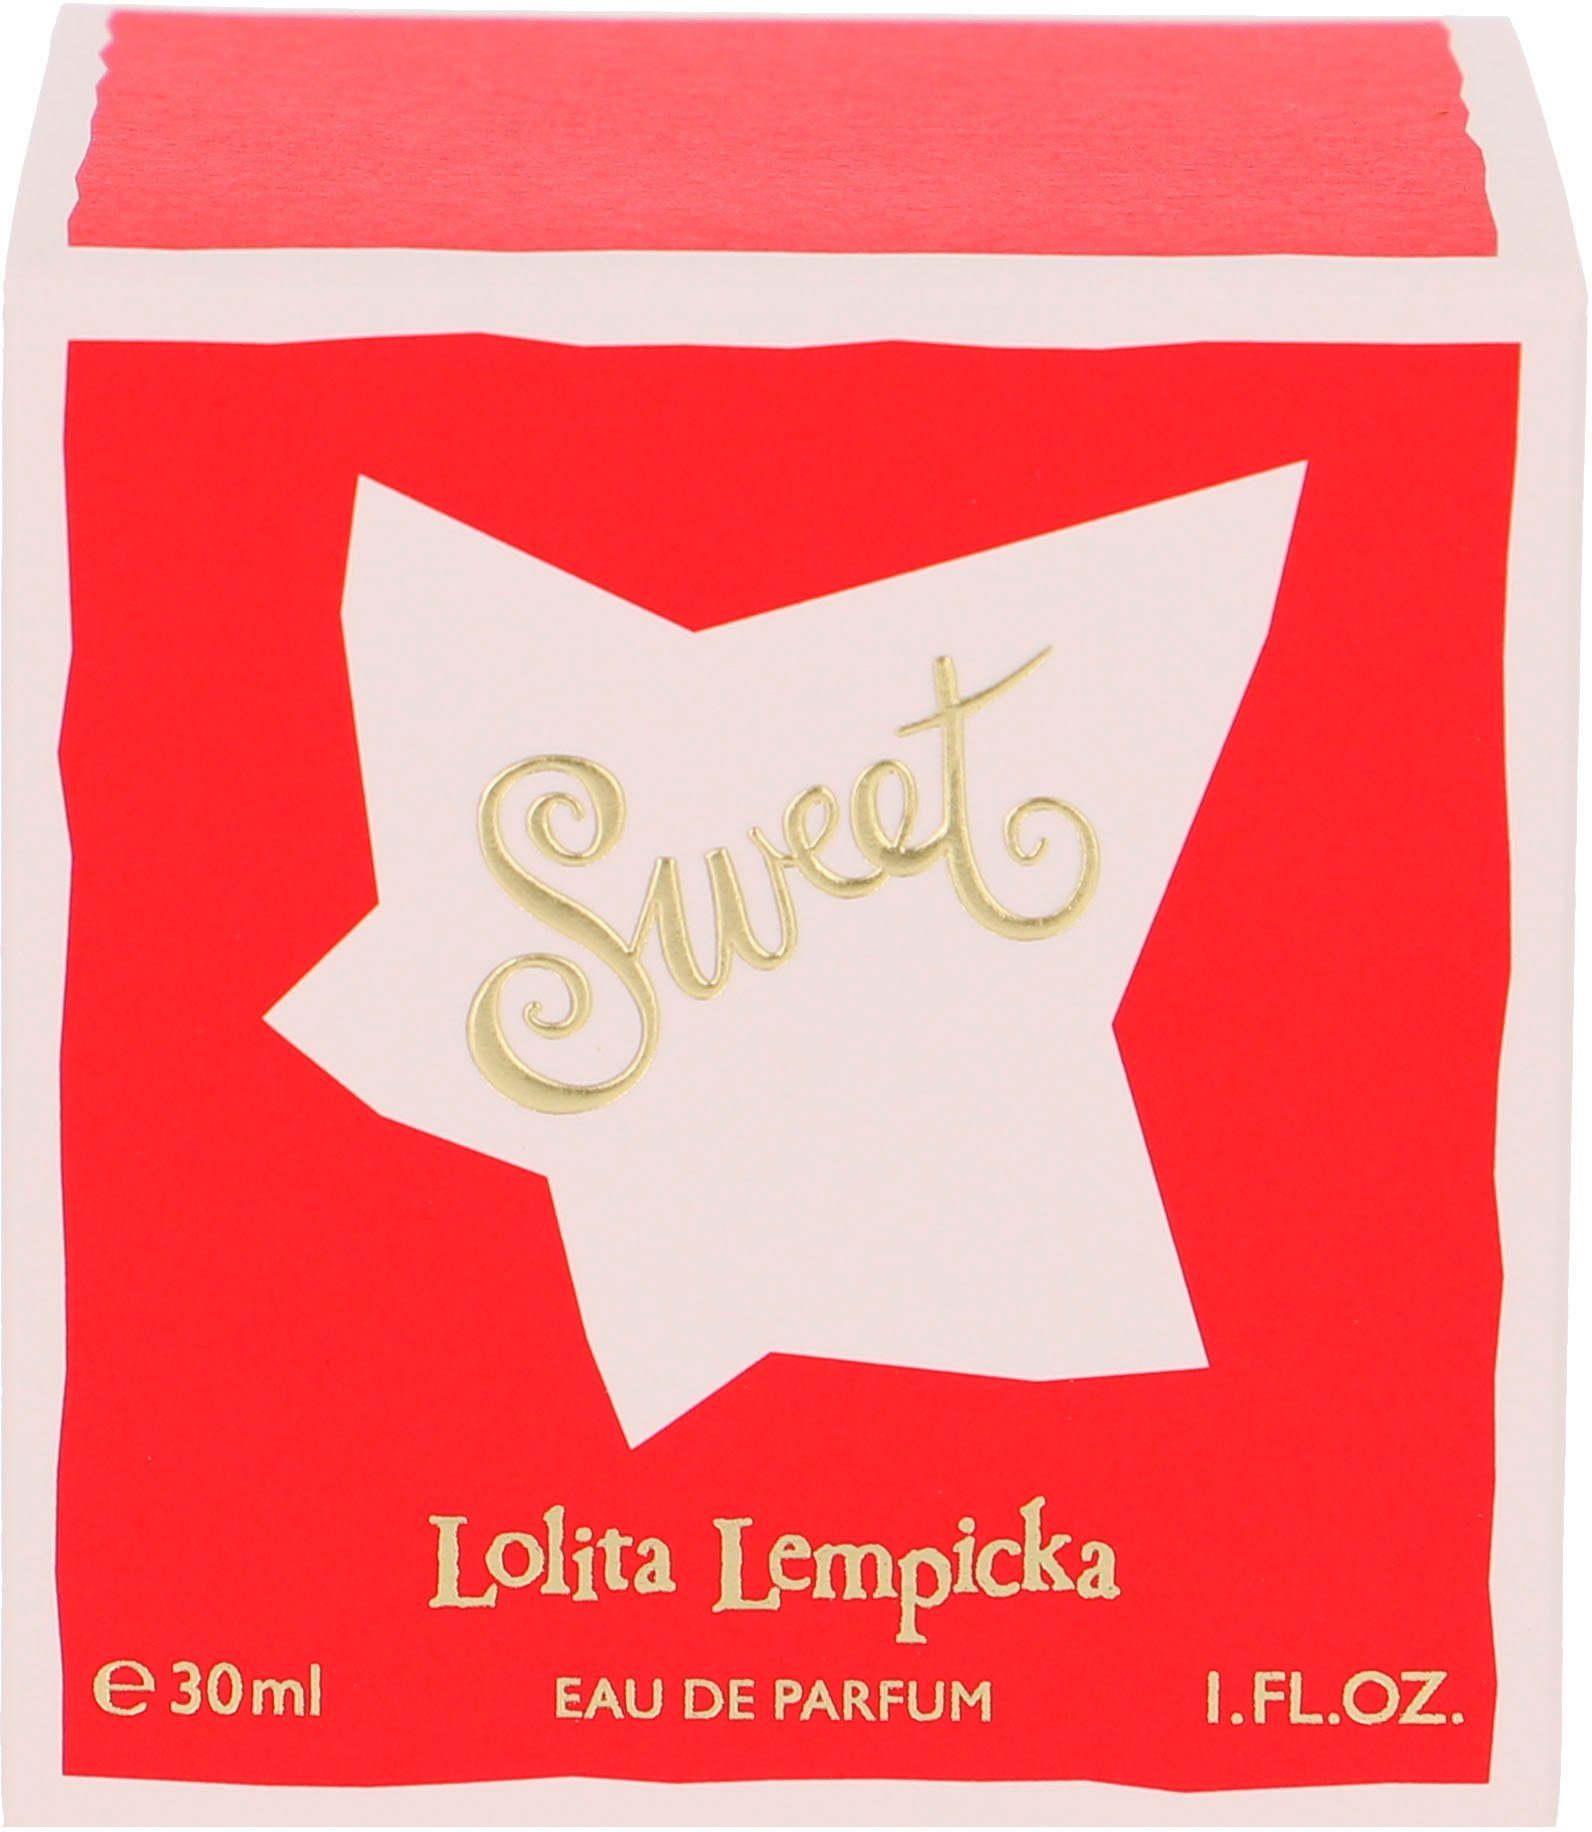 Lempicka Parfum Eau Lolita Lolita Sweet Lempicka de